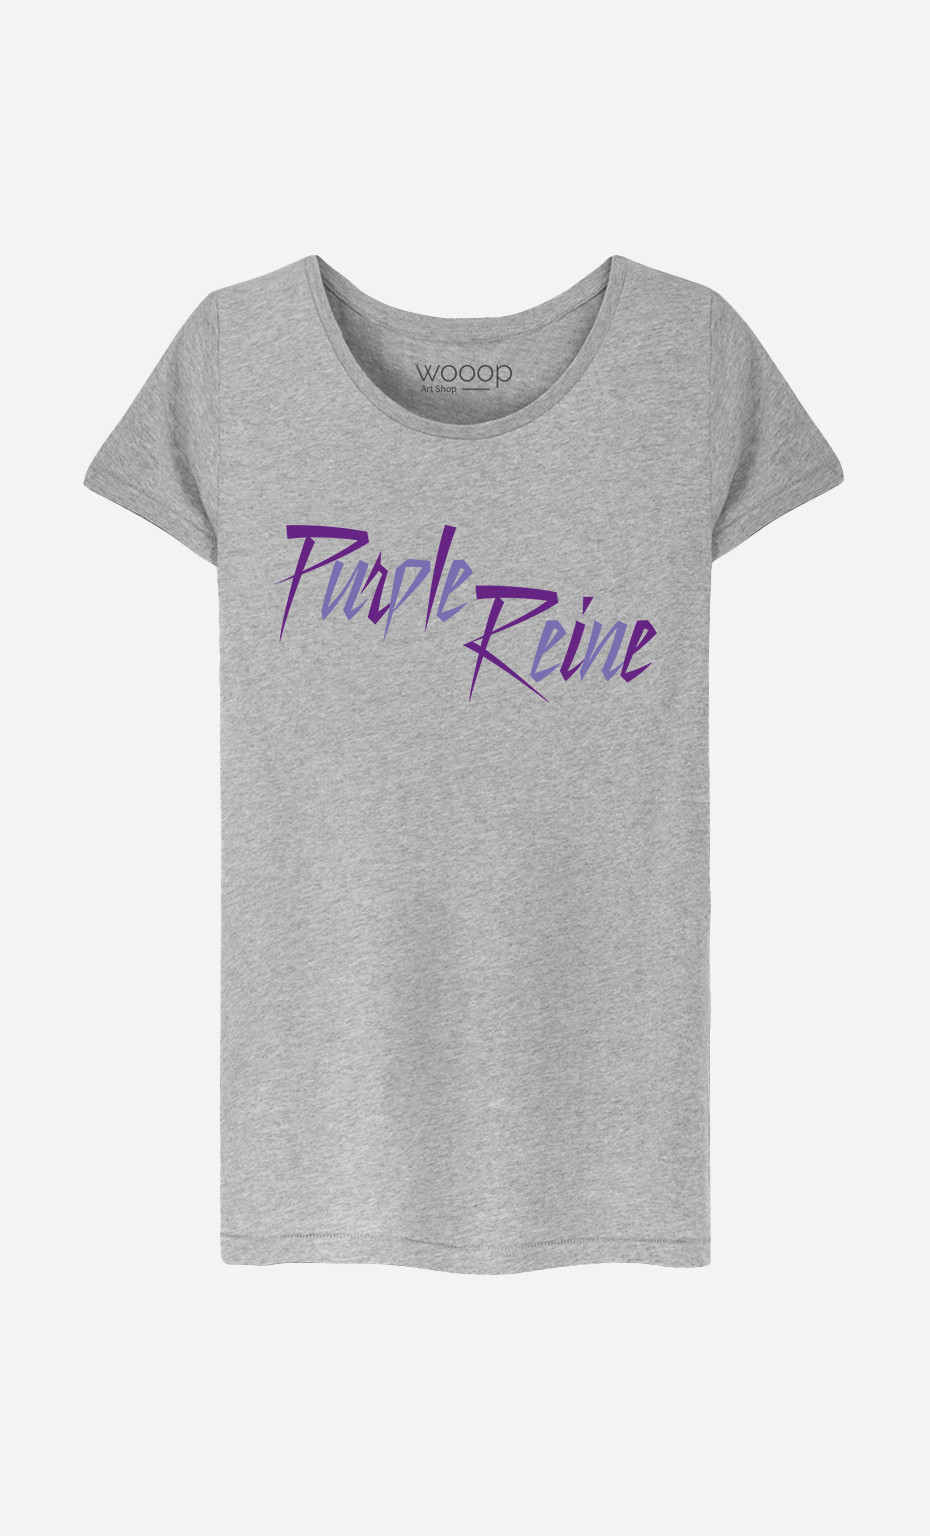 T-Shirt Femme Purple Reine